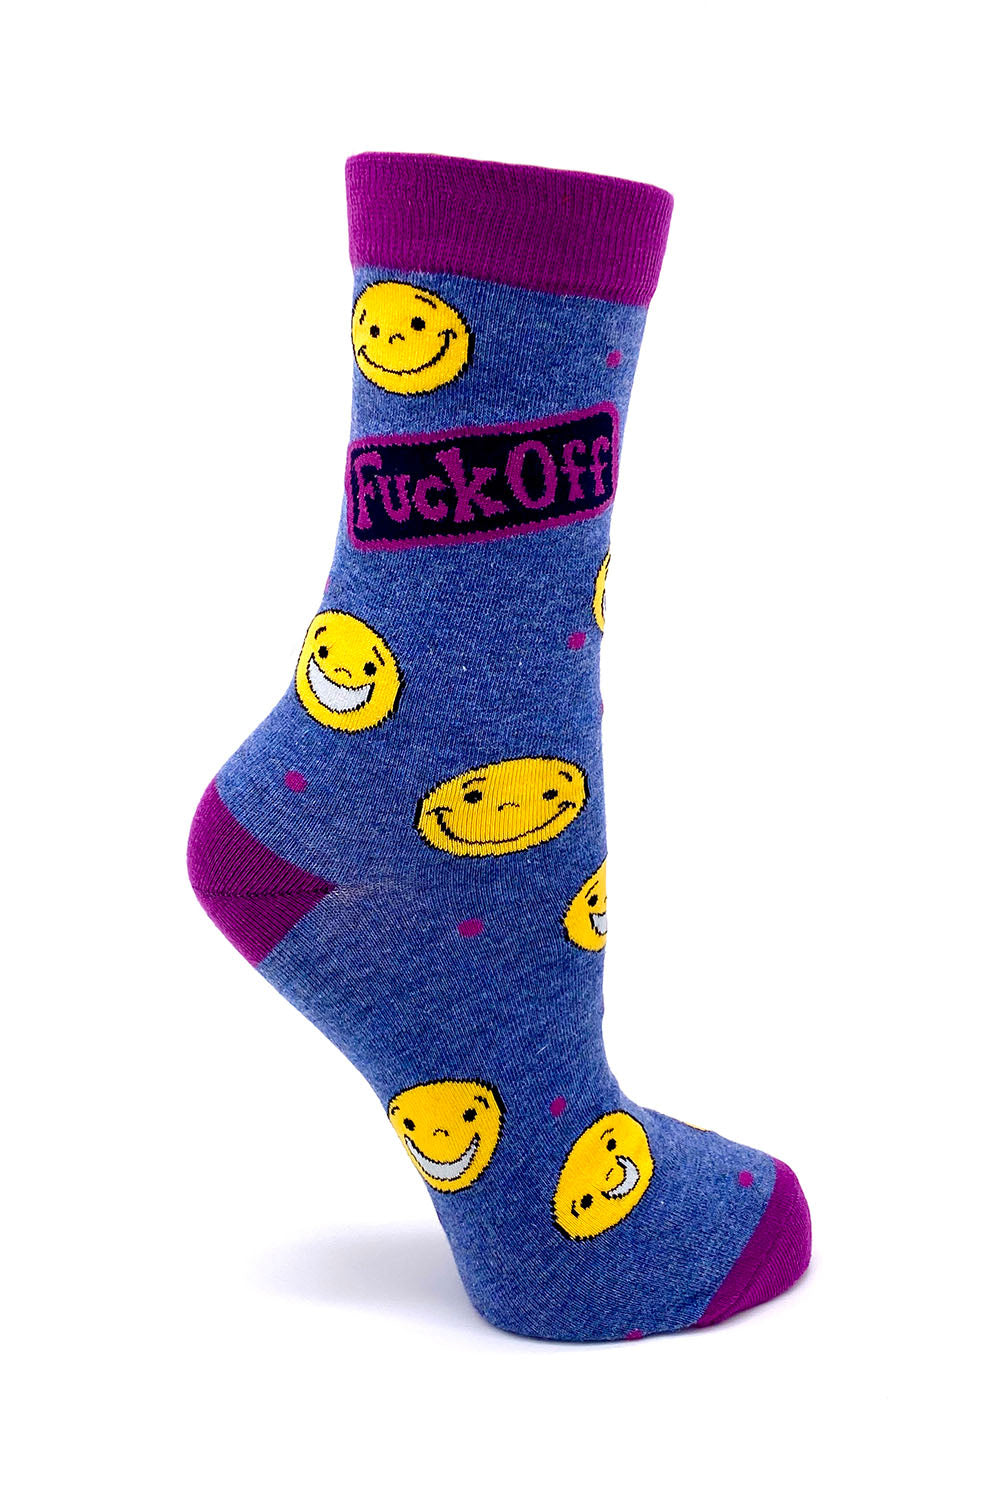 Funny socks with sayings Fuck Off Women's cotton crew socks